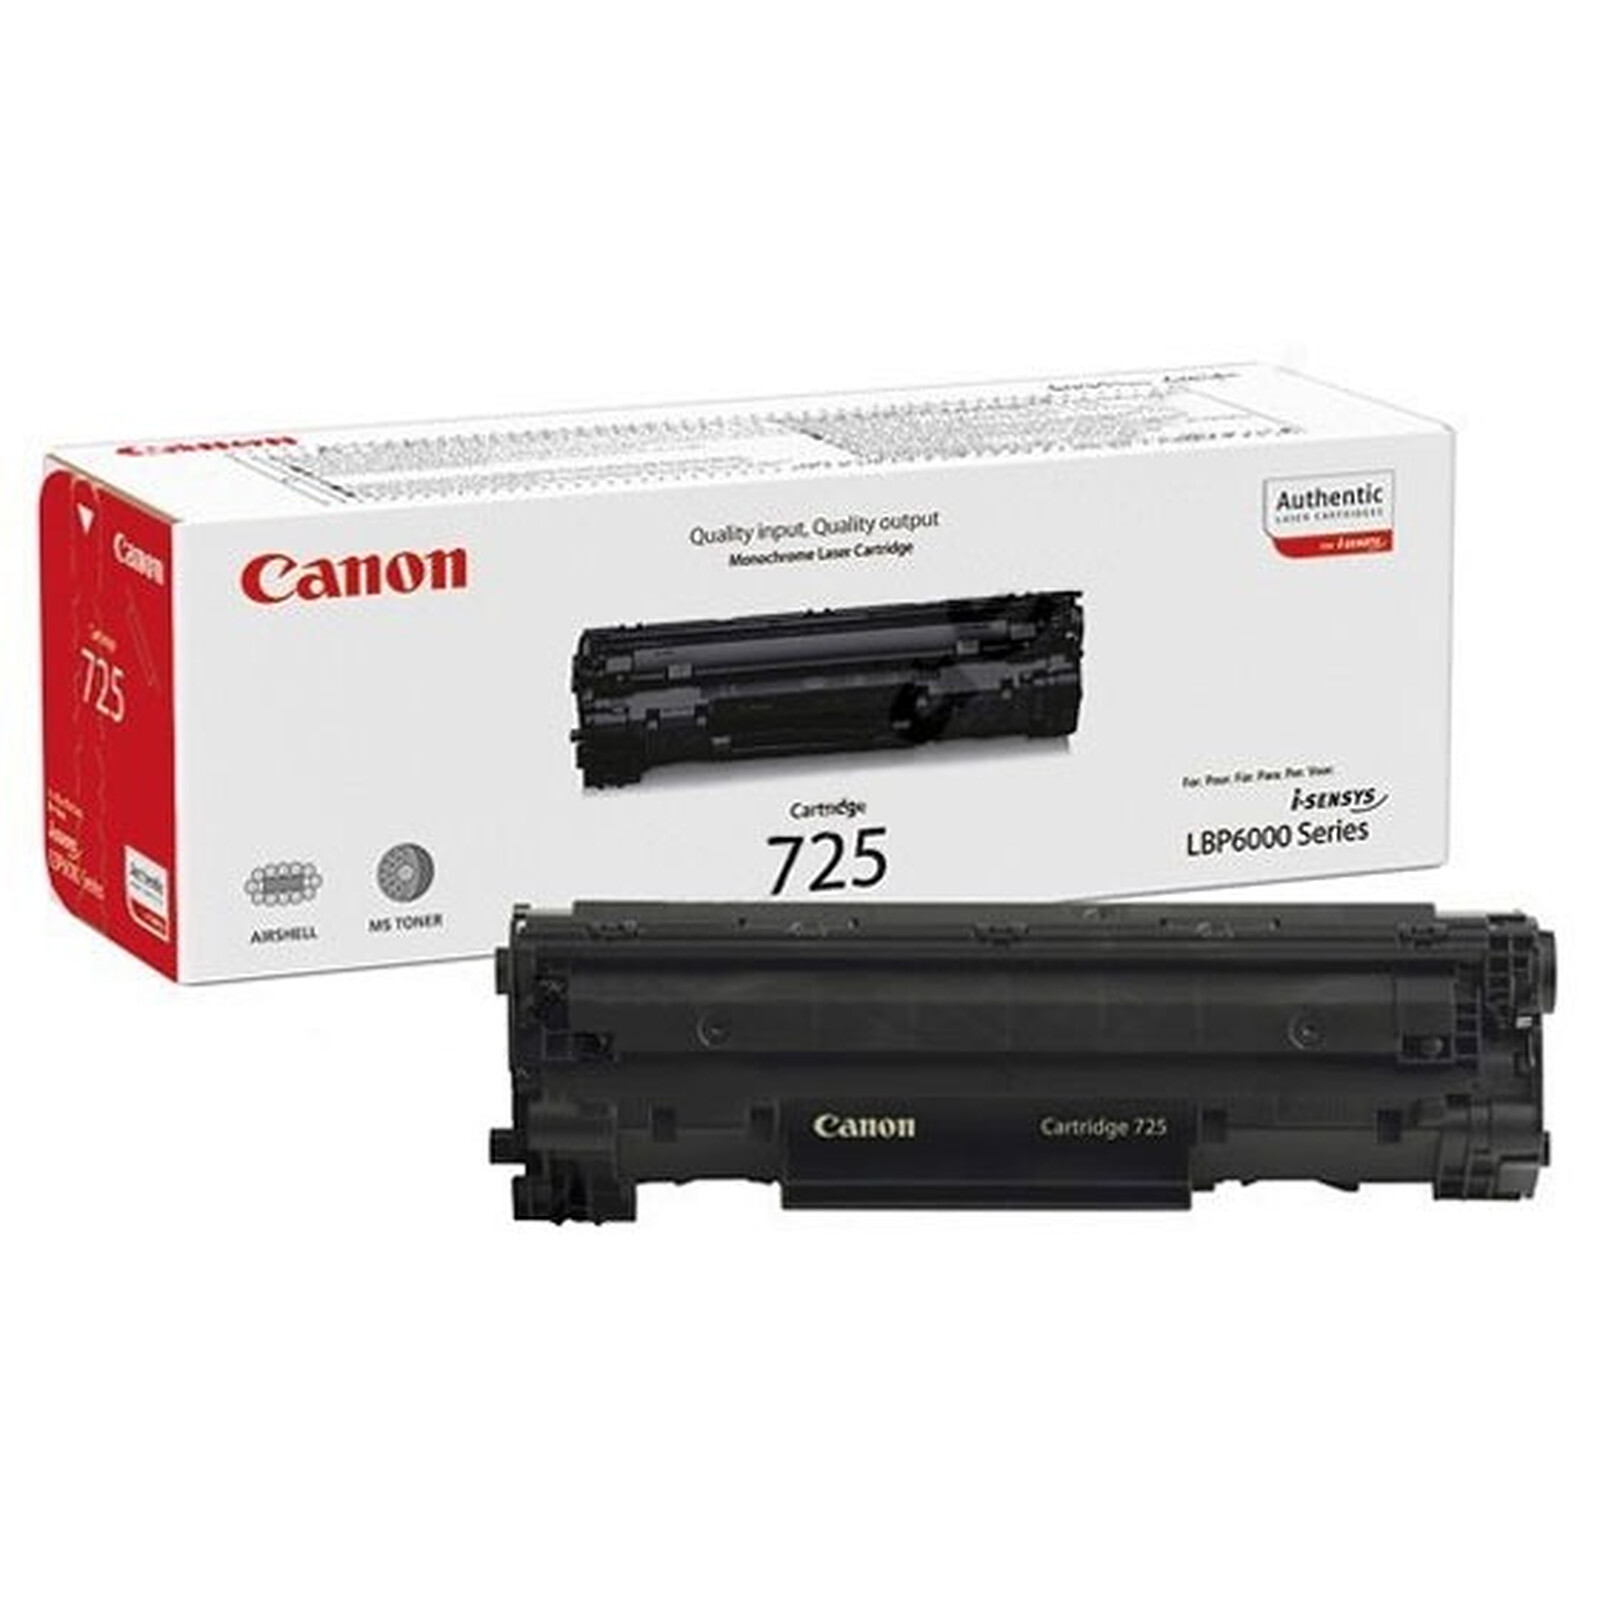 Canon cartridge 725. Canon Cartridge 725h. Картридж Canon Cartridge 725. Canon Cartridge 725 (3484b005). Картридж Canon 725 (3484b005).